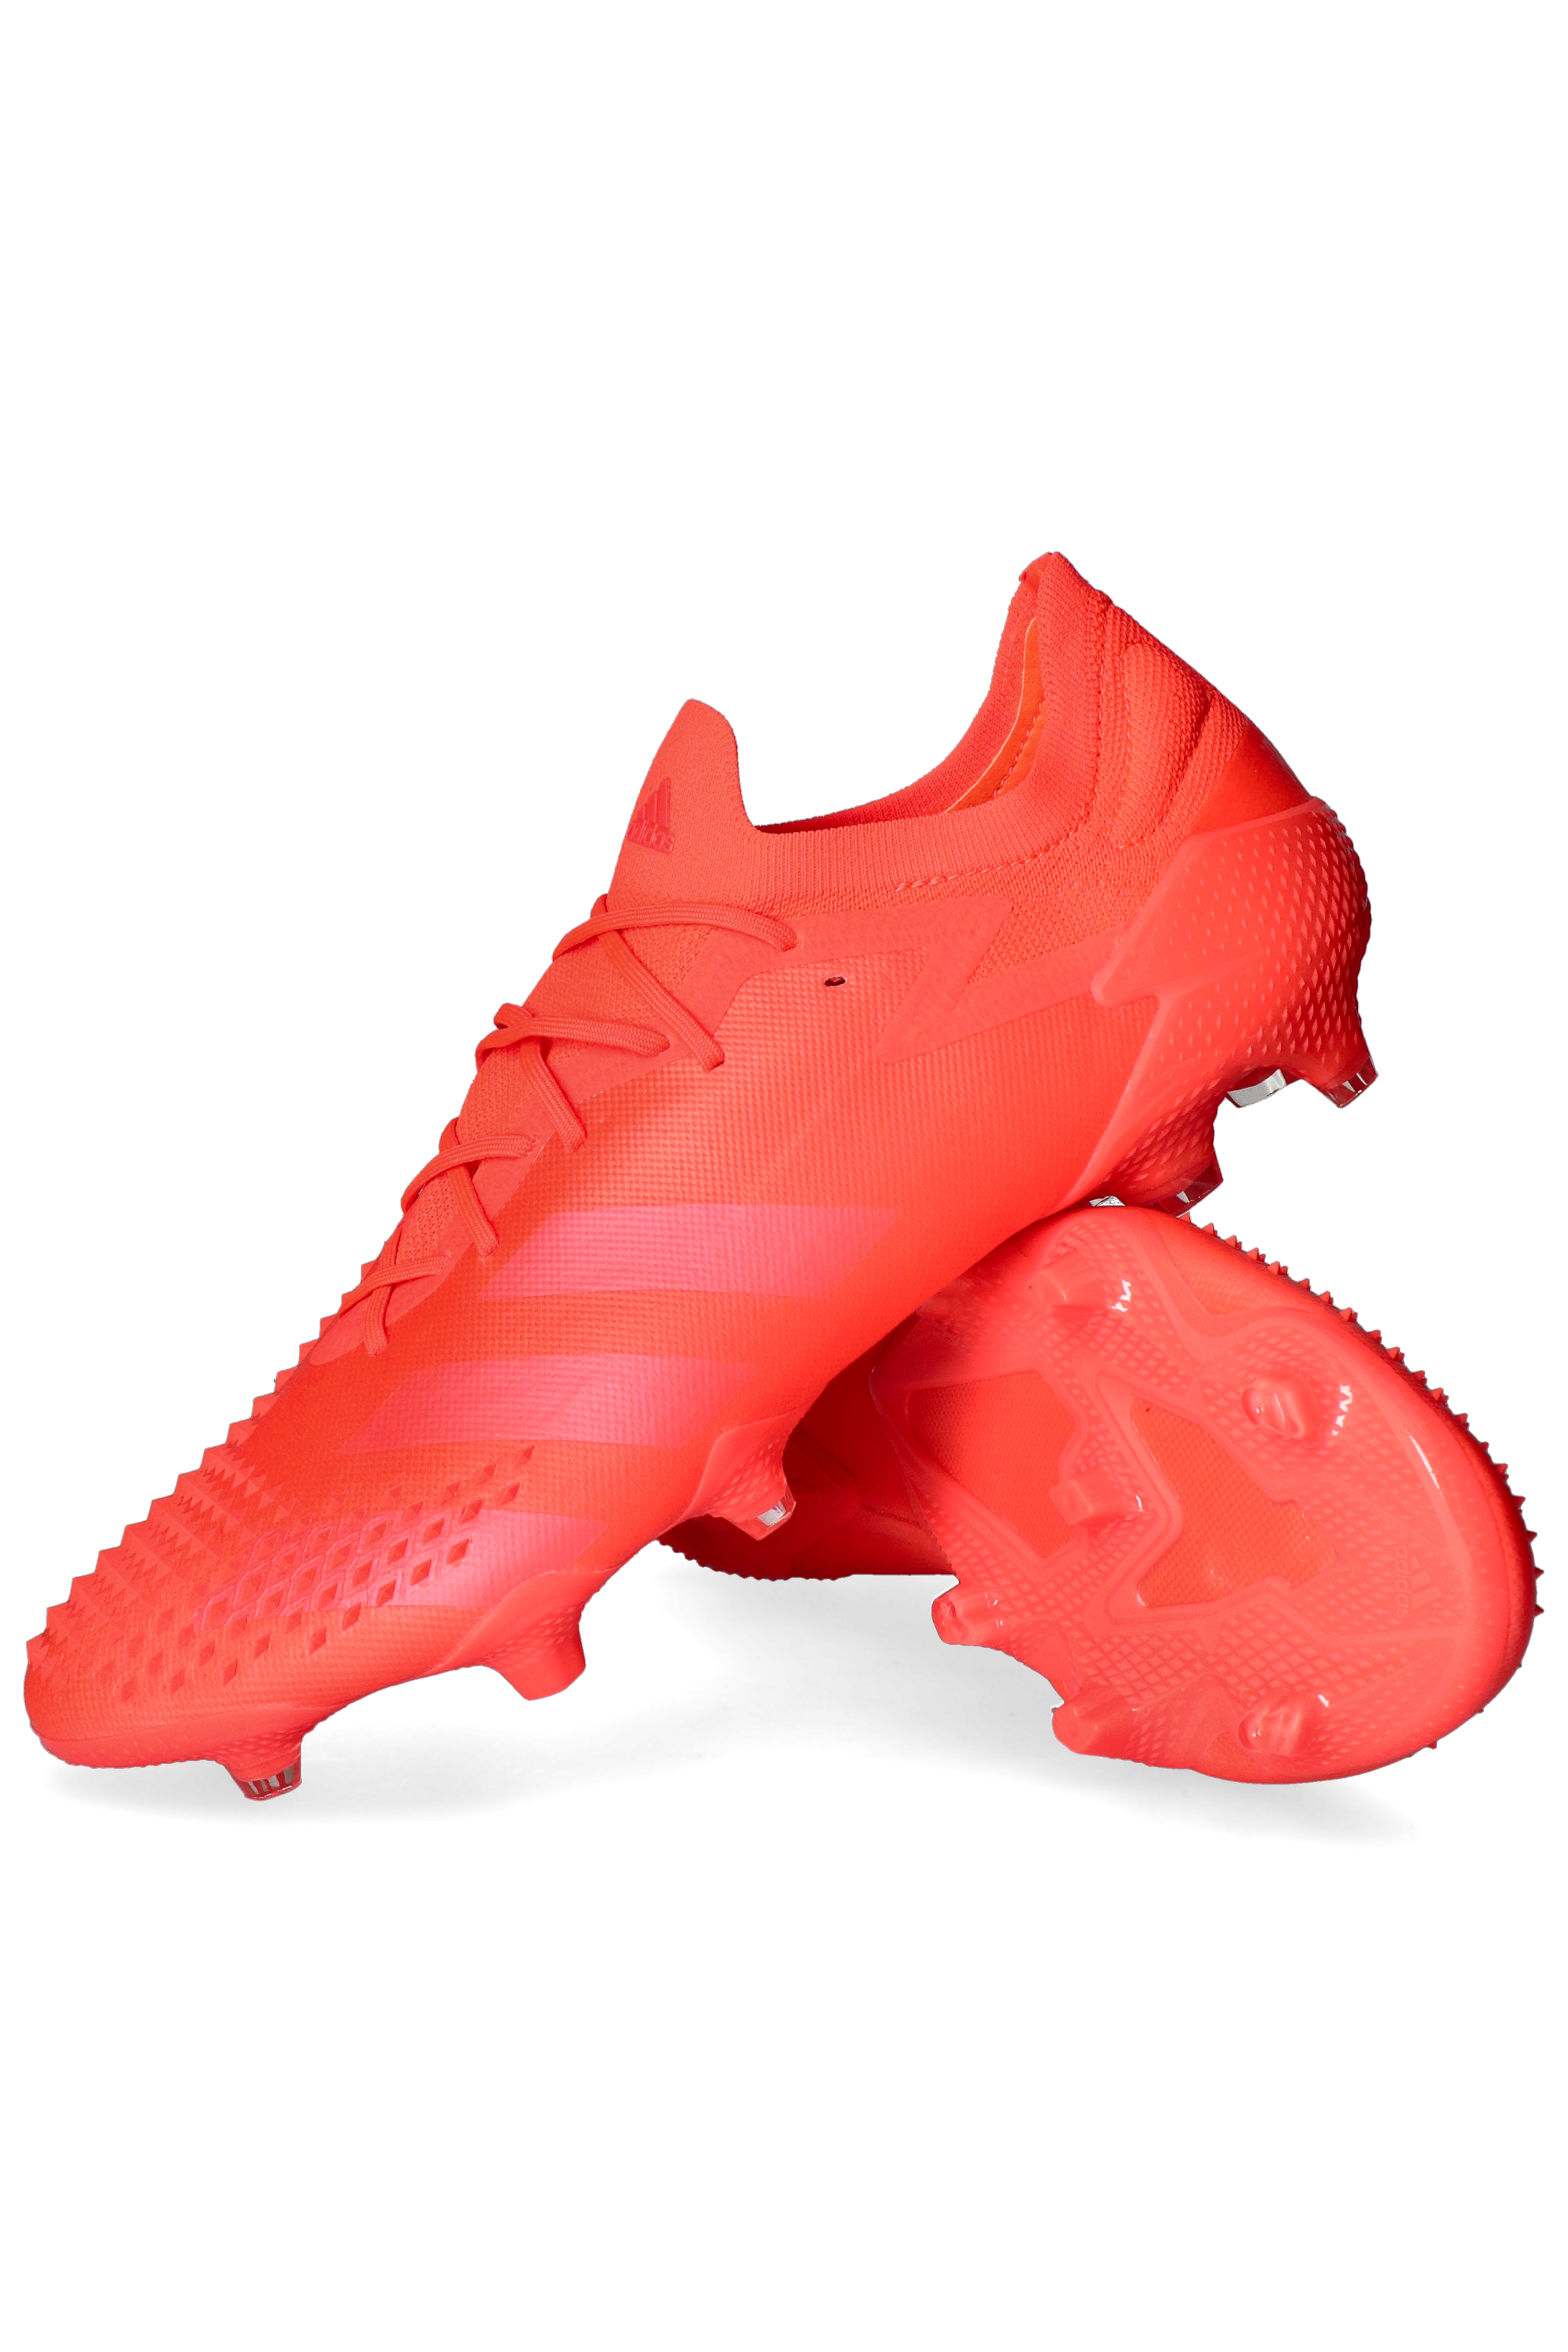 Buy your adidas Predator 20+ football boots at Unisport today